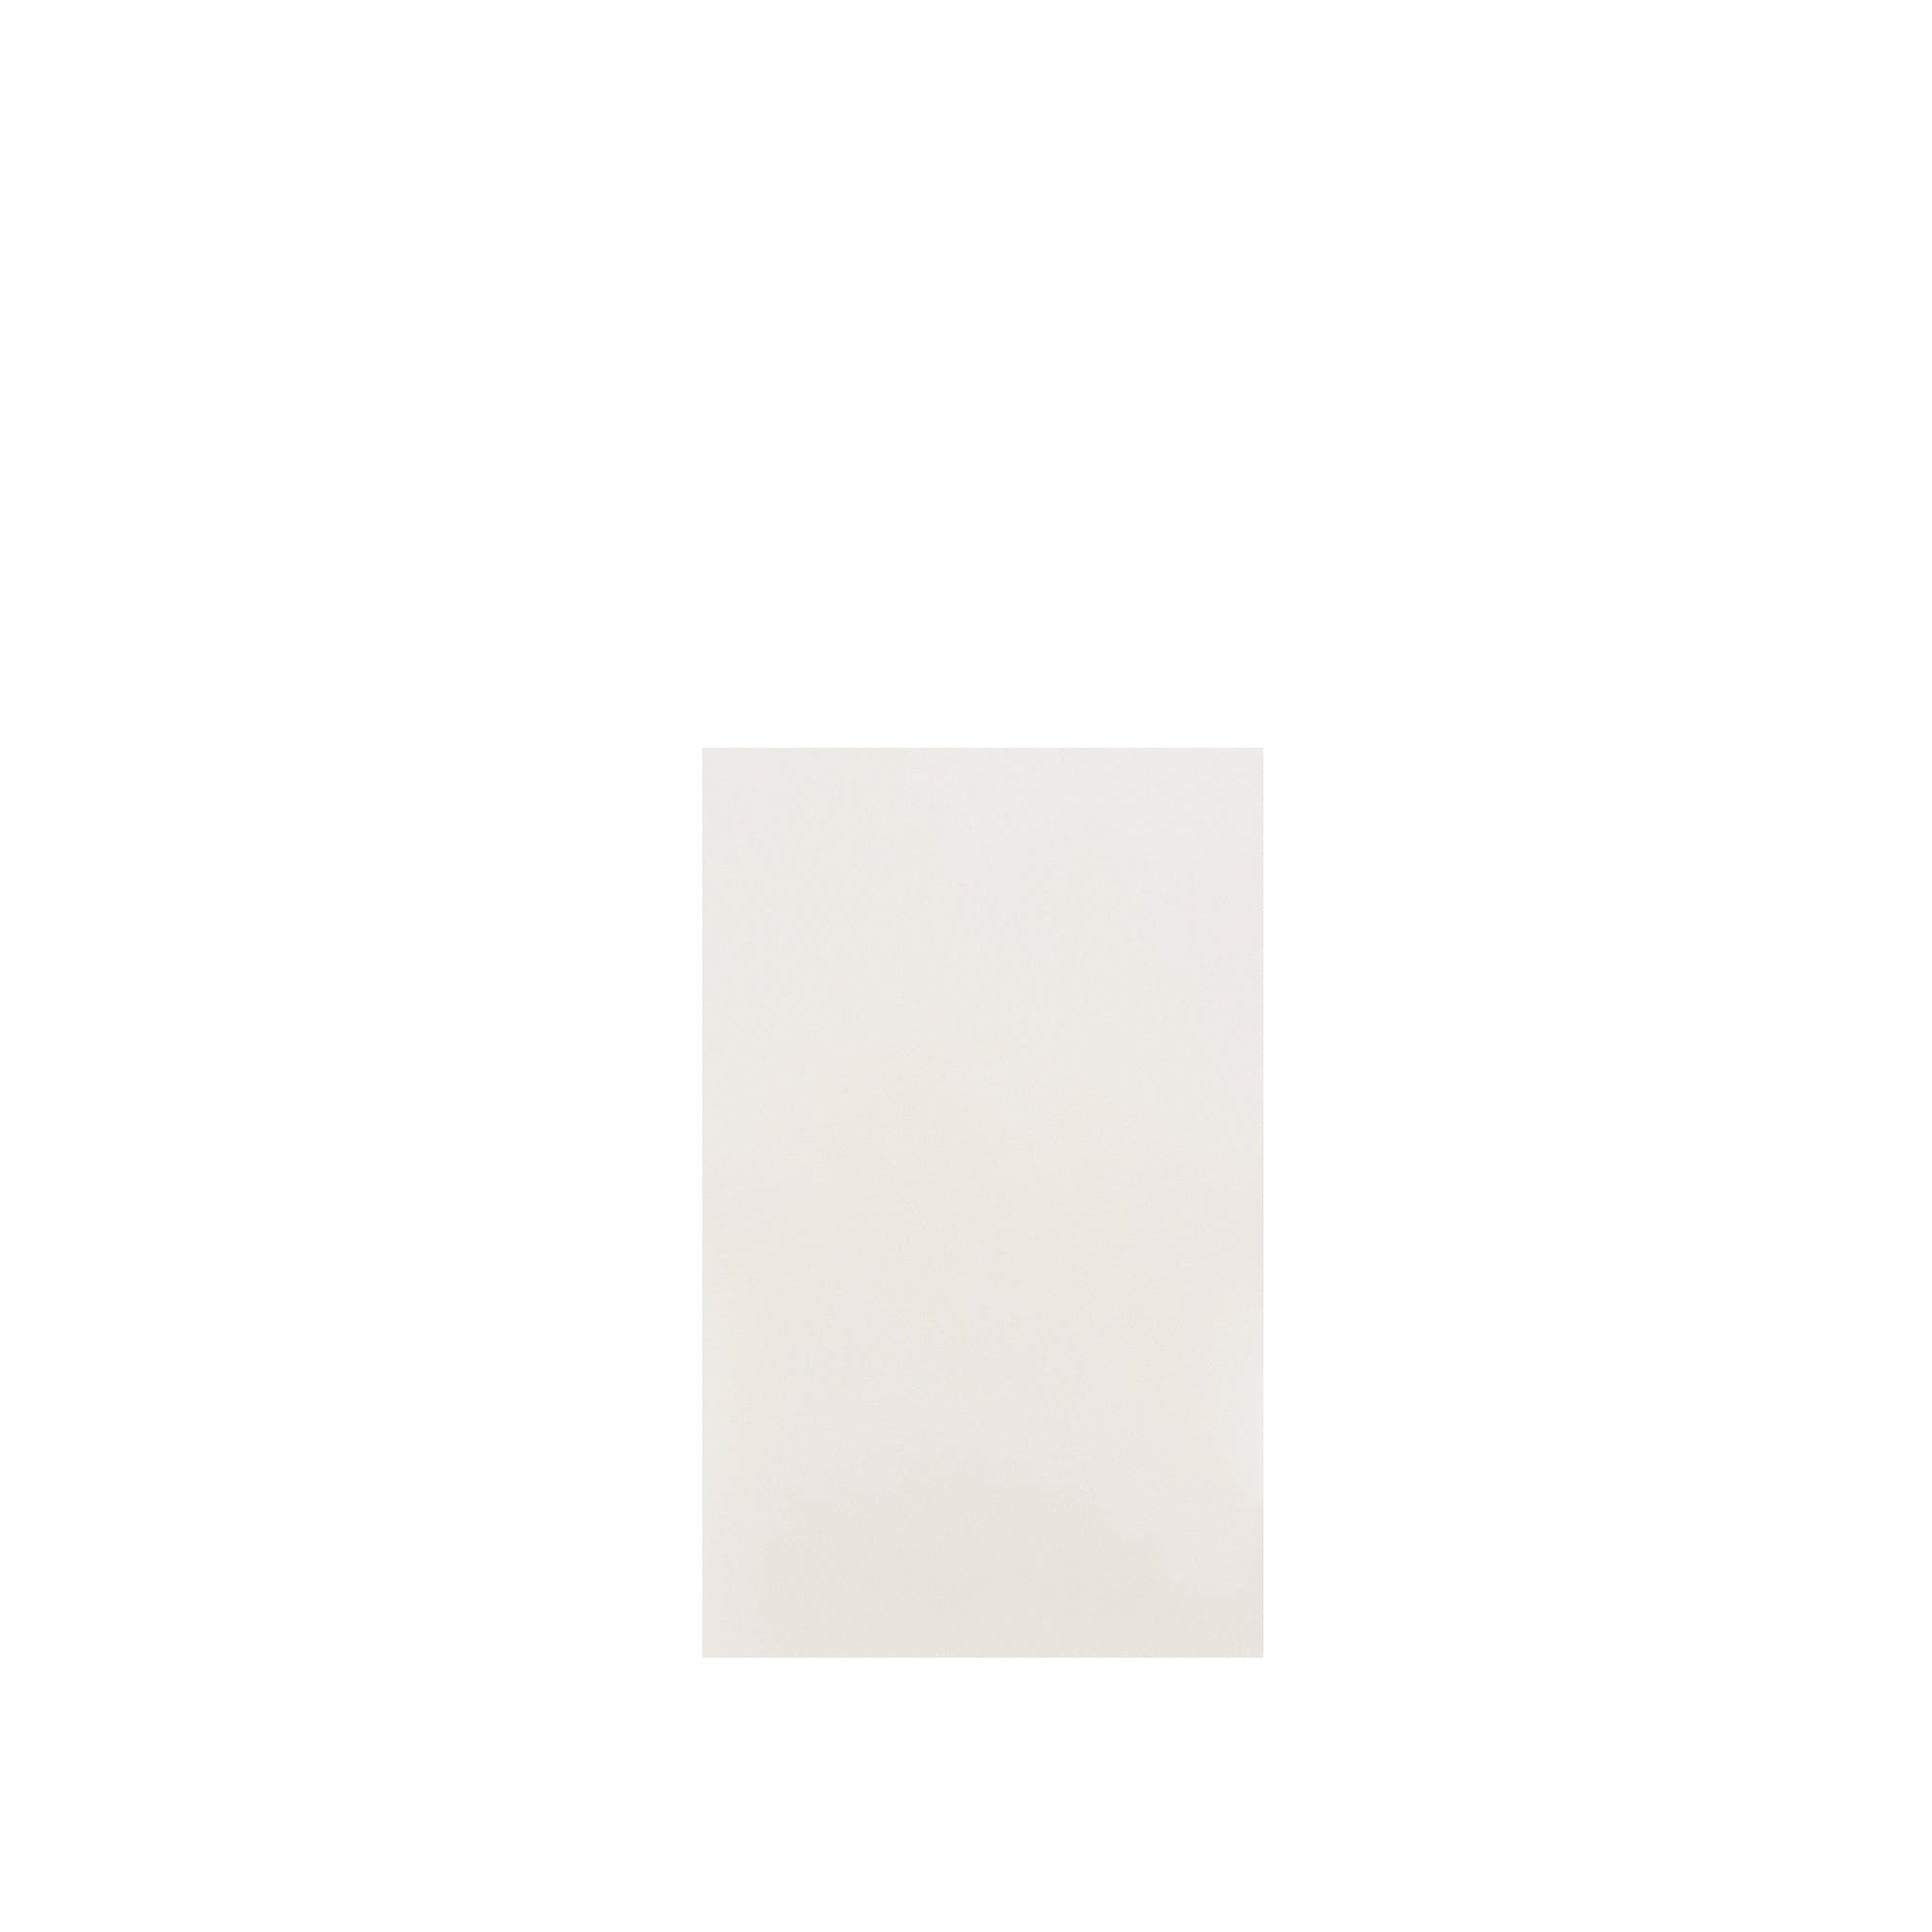 Skin Panel for Inset Vintage White raised Panel Style - RTA Wholesalers